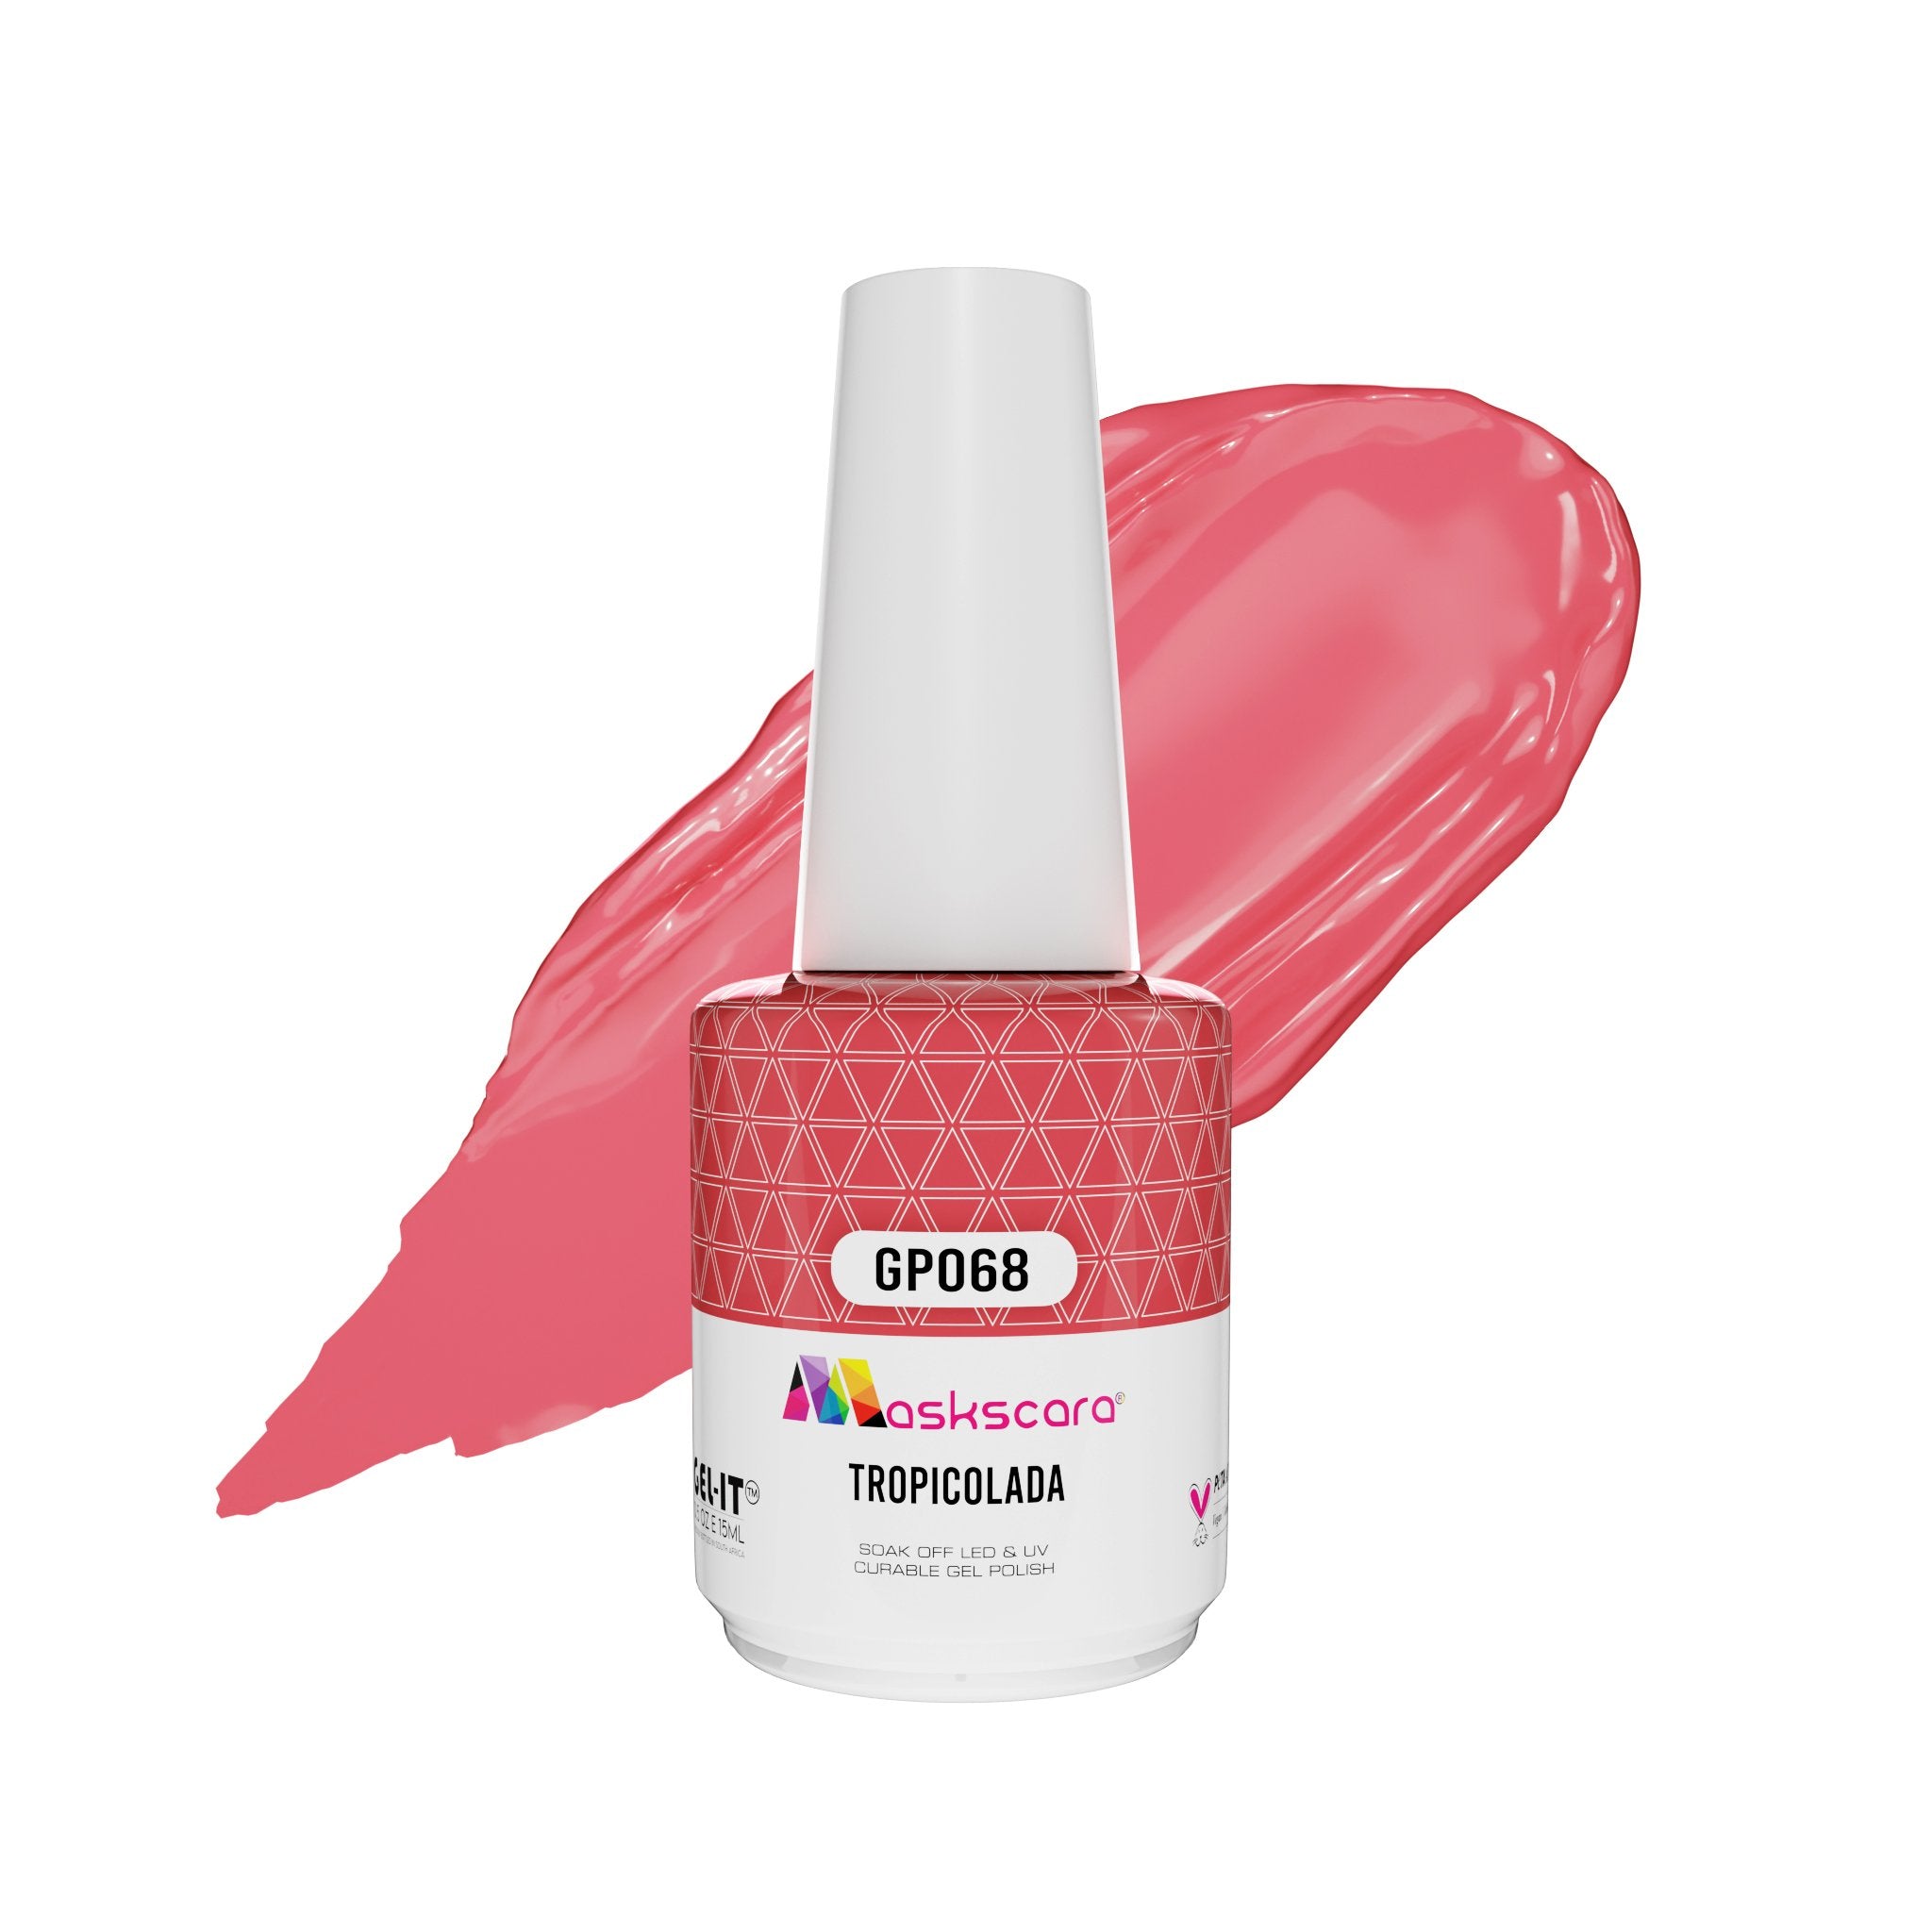 <img scr = “ GP068 Tropicolada.jpeg” alt = “Rose Coral gel polish colour by the brand Maskscara”>